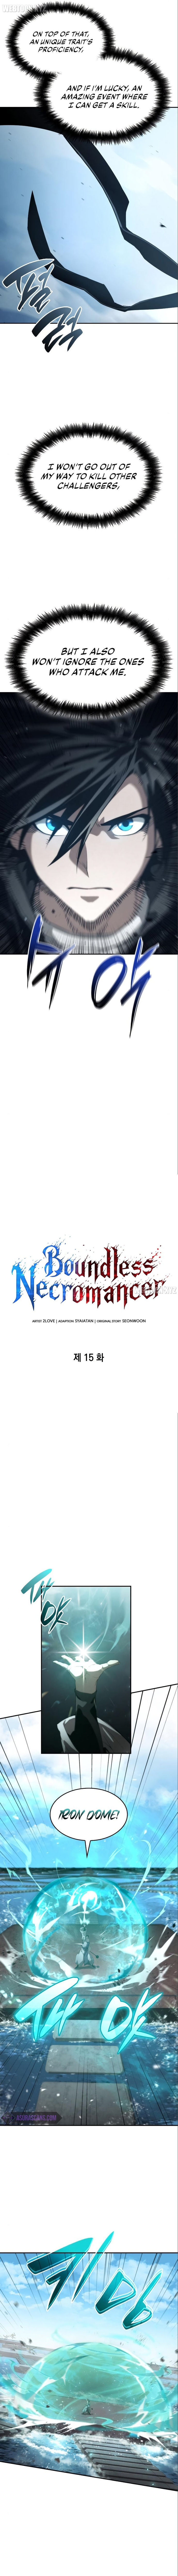 boundless-necromancer-chap-15-4